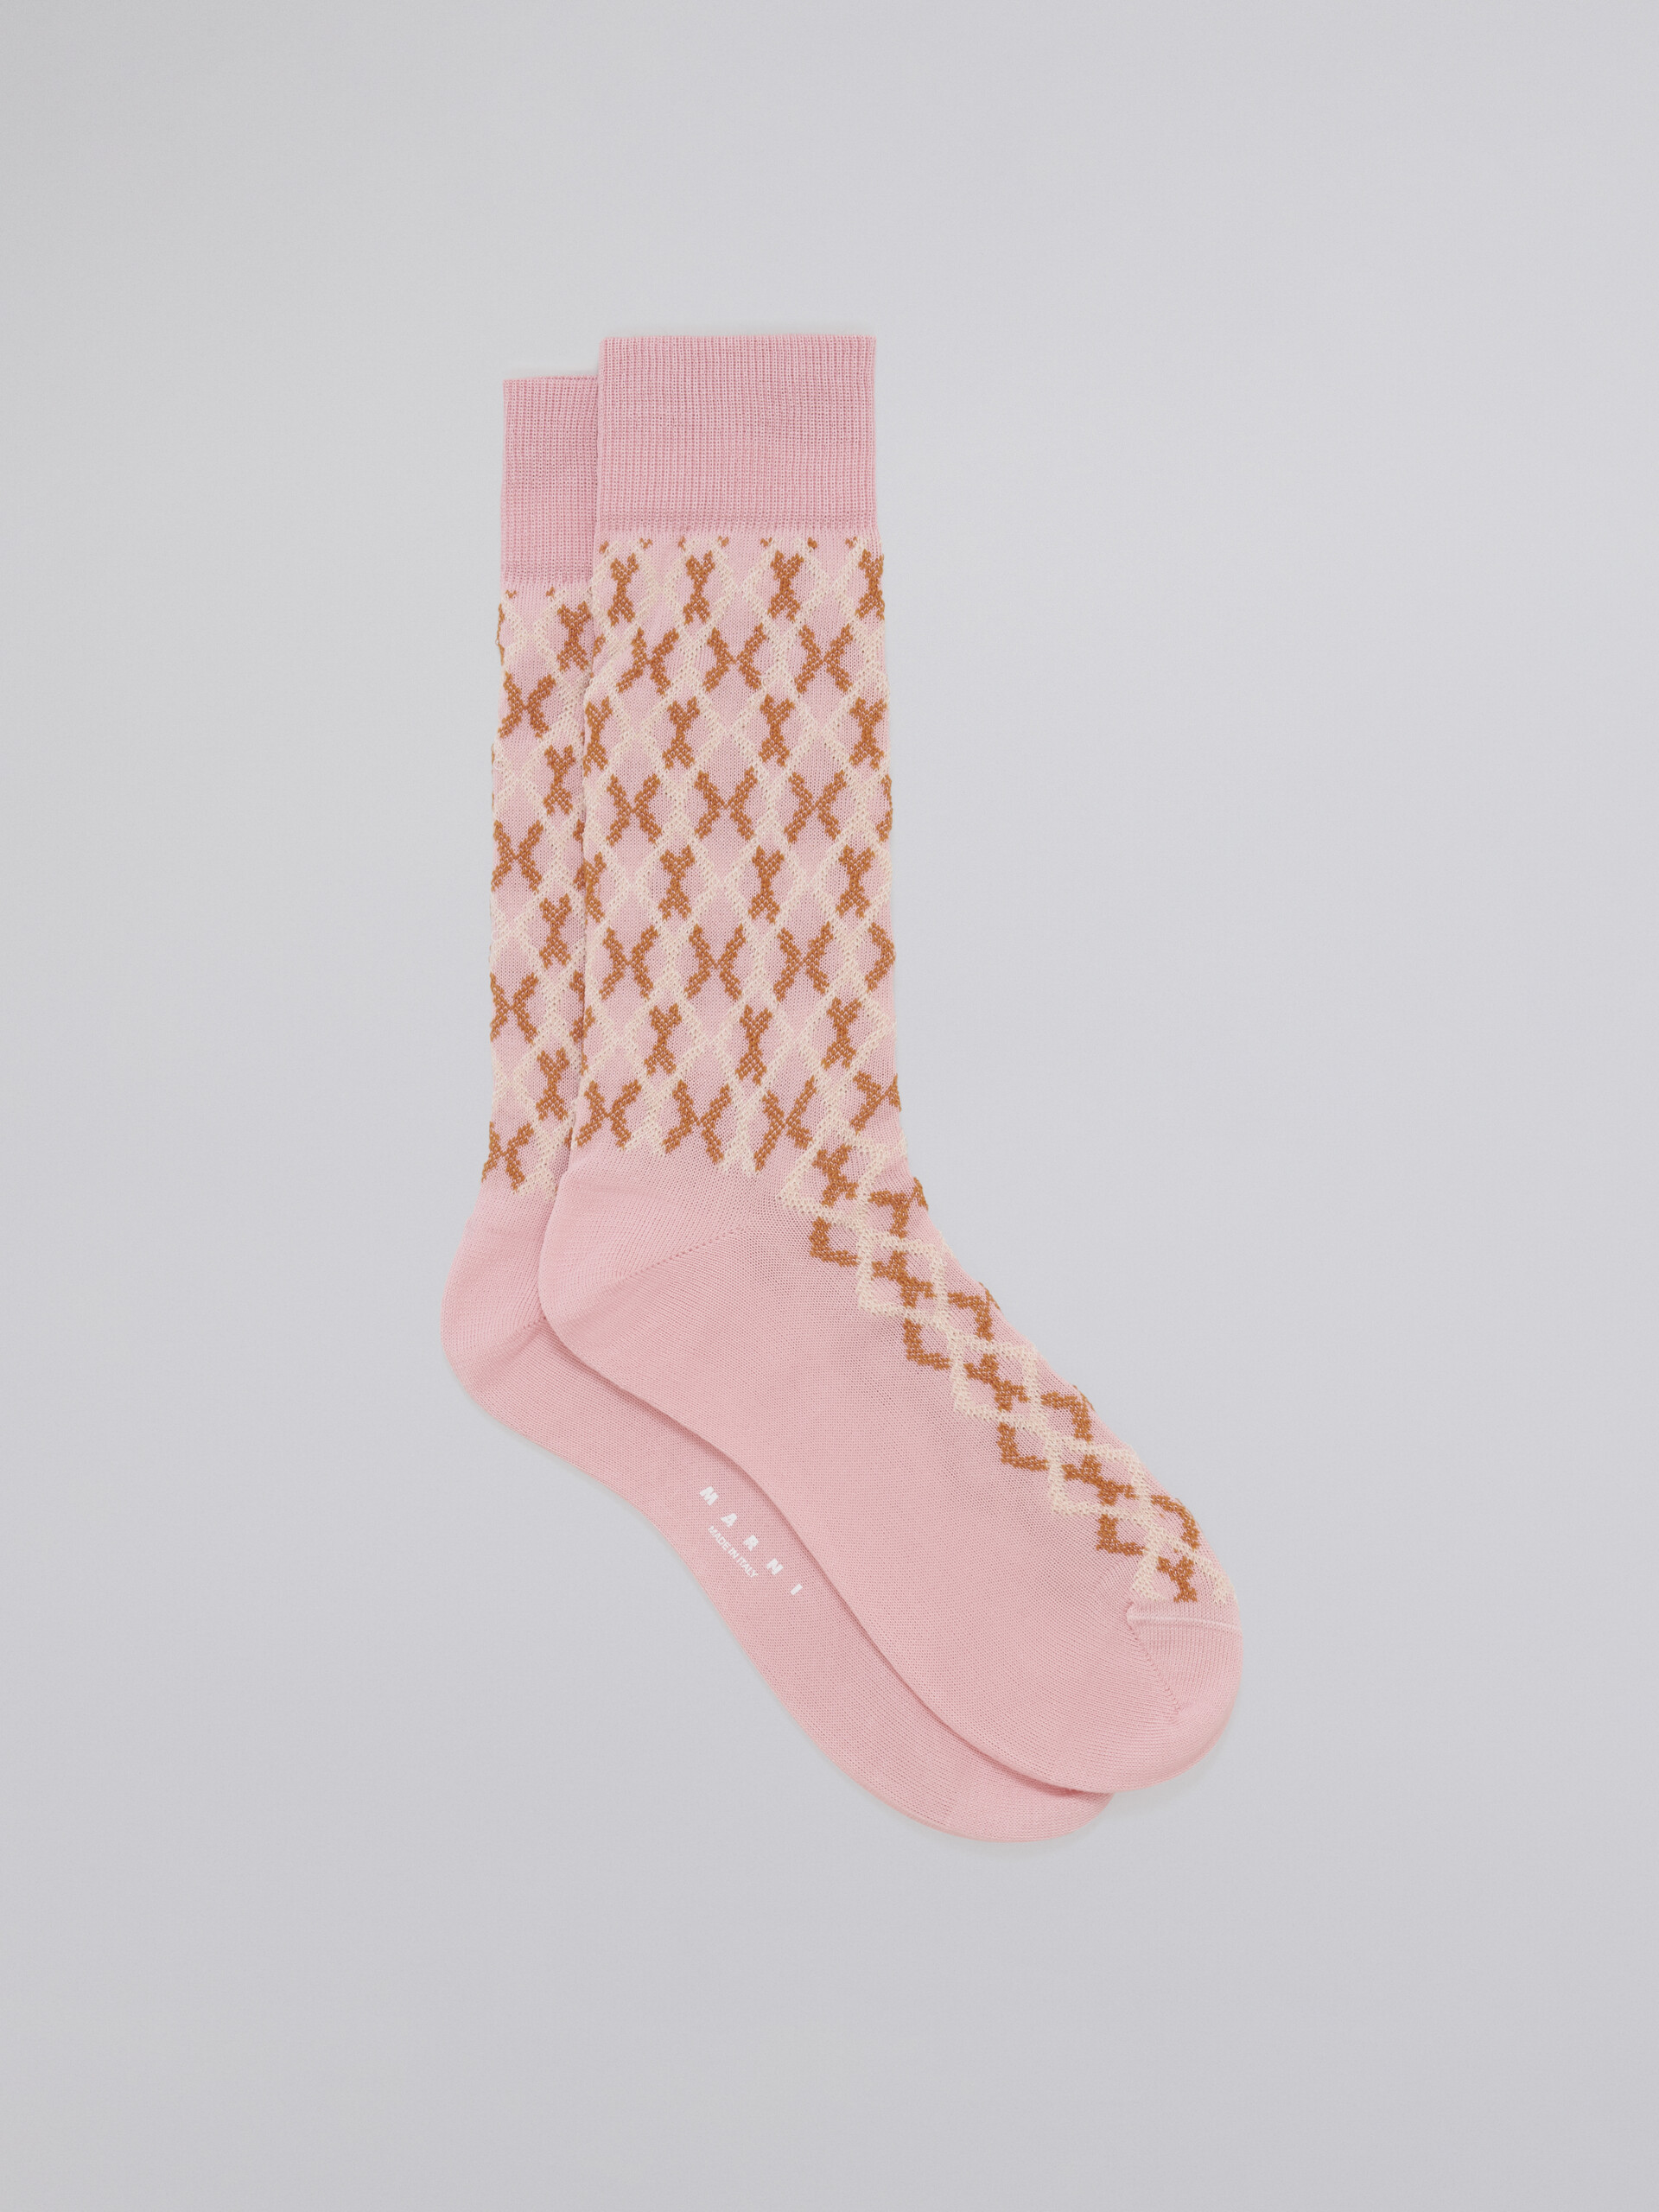 Rosafarbene Socke mit Mikro-Karojacquard aus Baumwolle und Nylon - Socken - Image 1